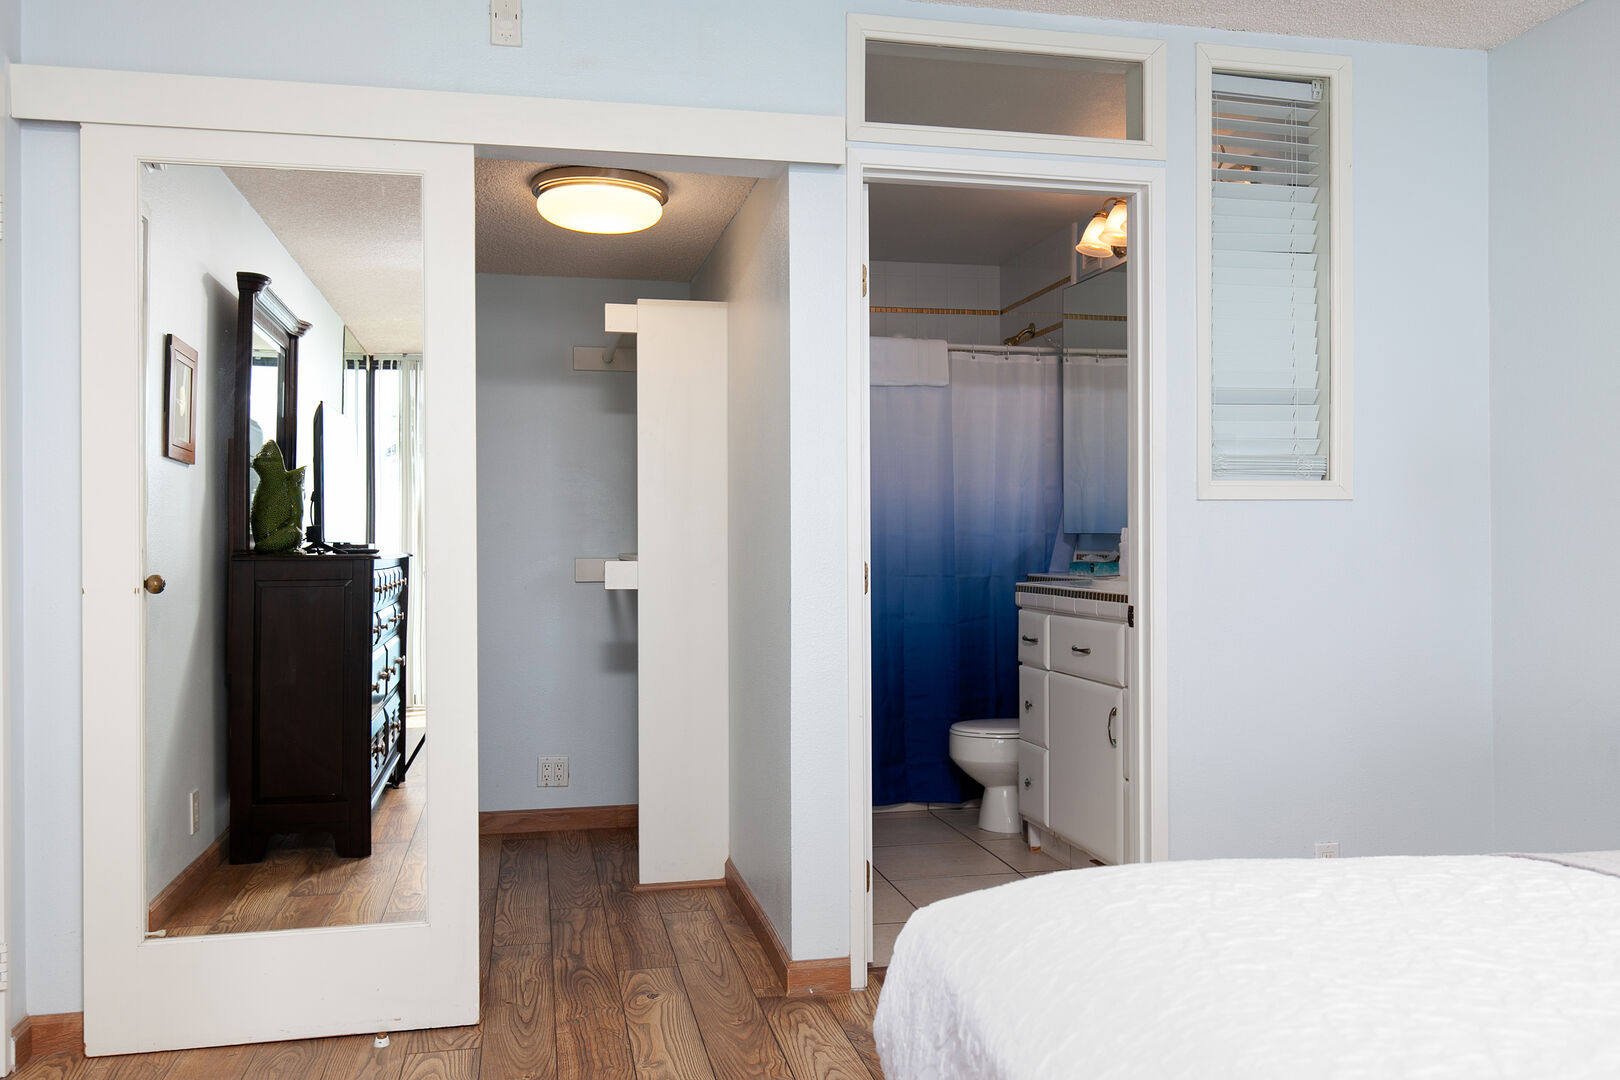 Primary Bedroom / Large Closet / En Suite Bathroom